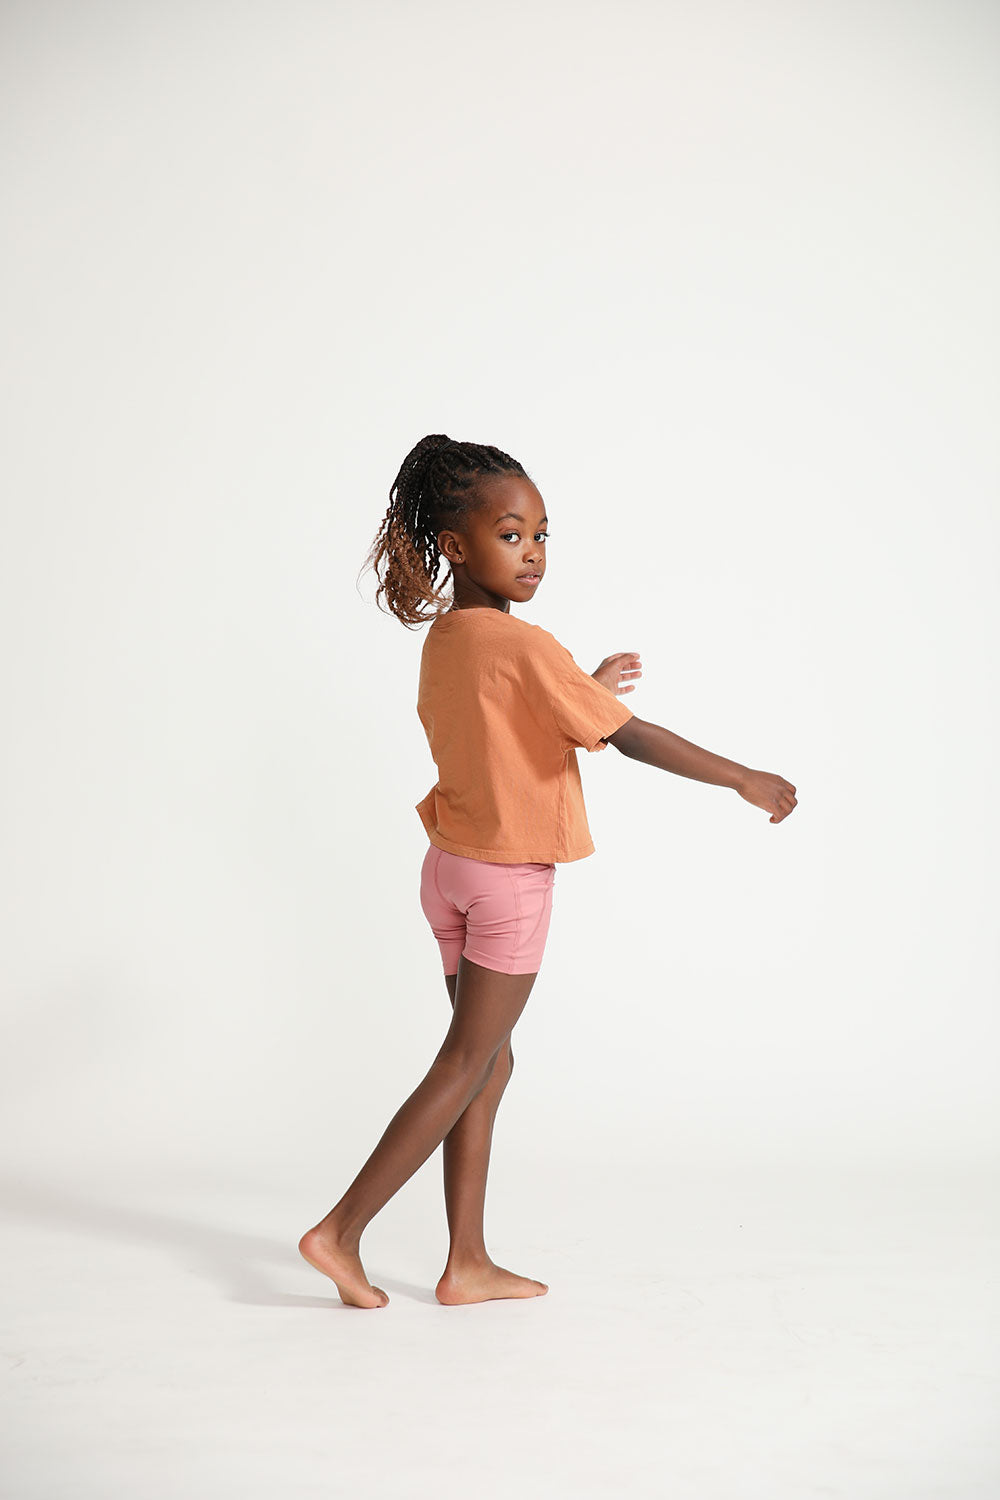 Young girl wearing Everyway kids activewear. Featuring Daily Tee in Meerkat.